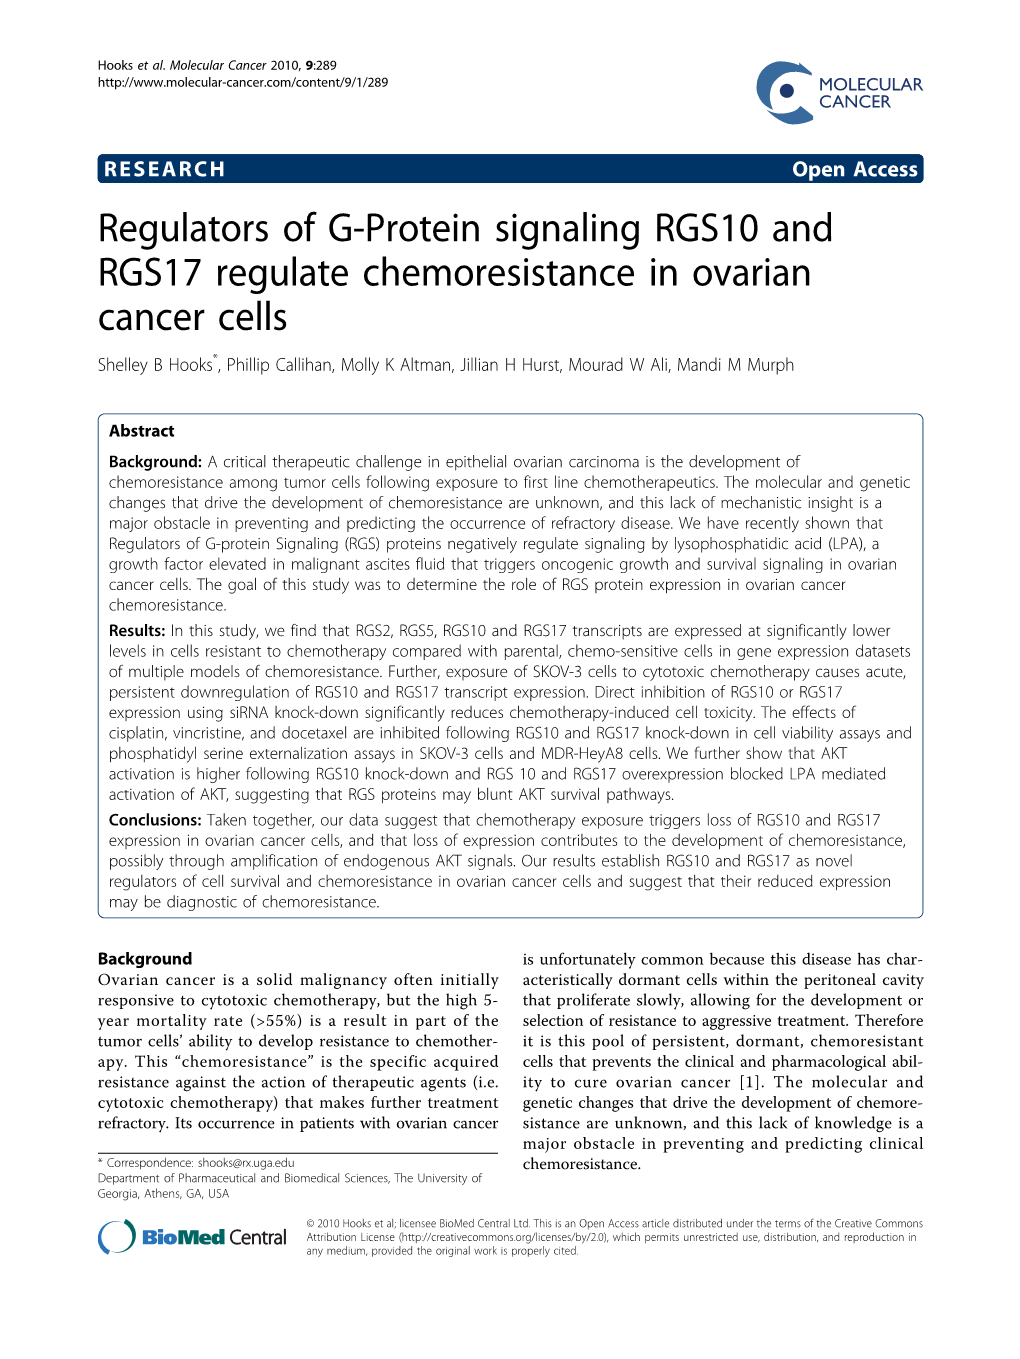 Regulators of G-Protein Signaling RGS10 and RGS17 Regulate